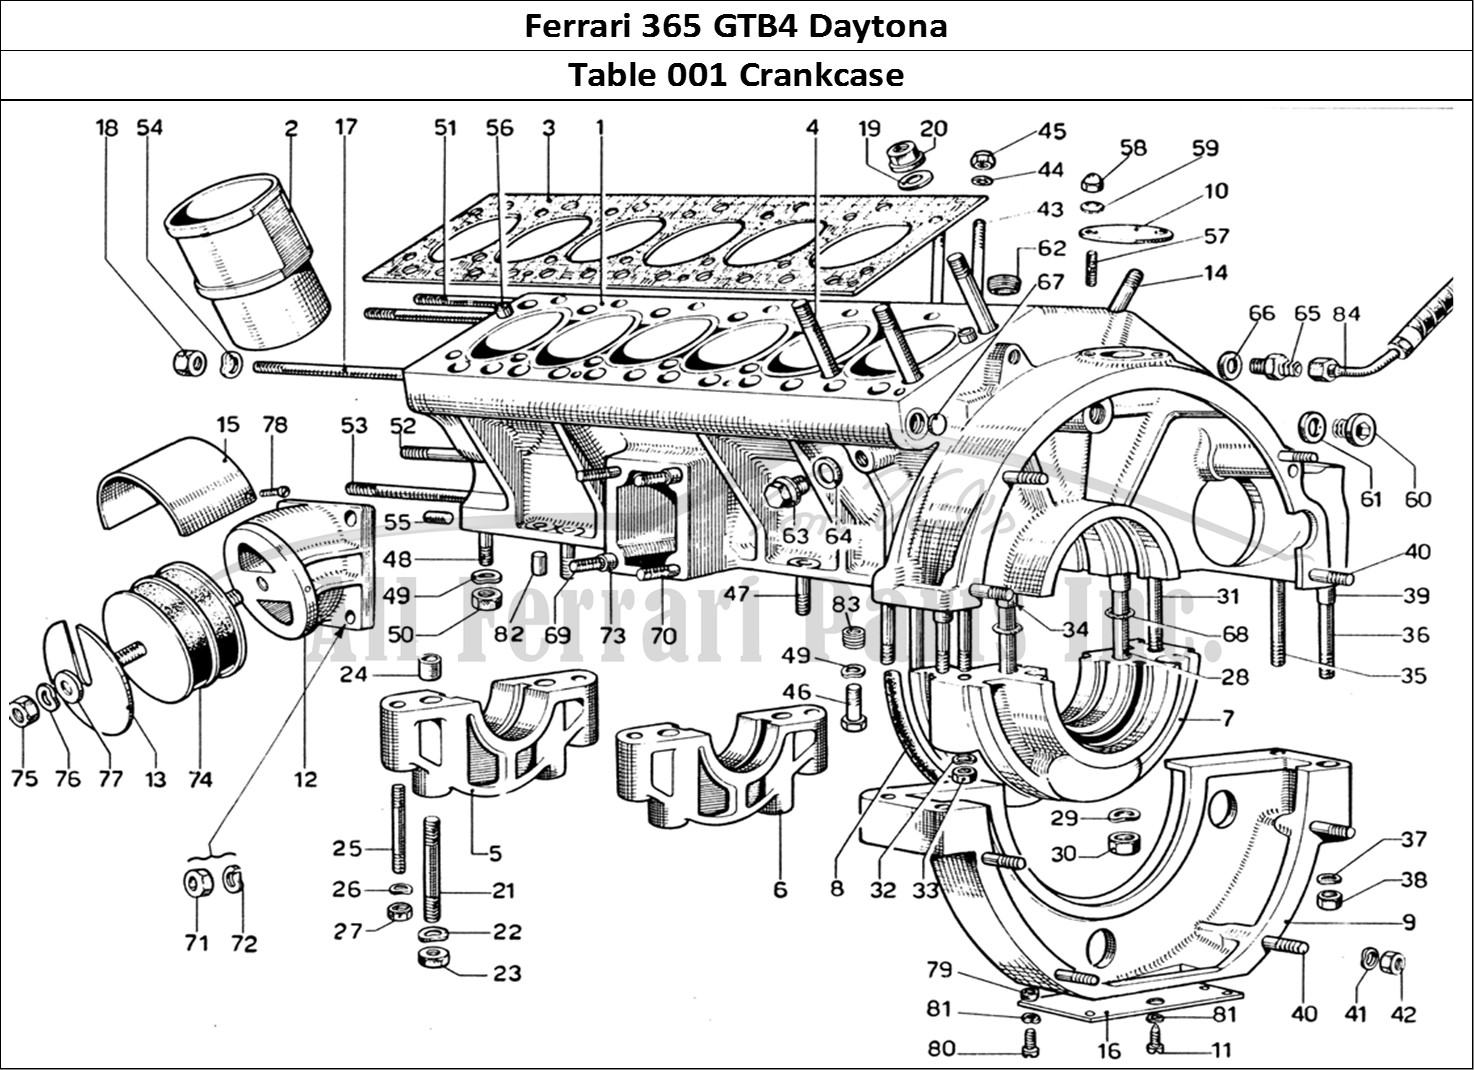 Ferrari Parts Ferrari 365 GTB4 Daytona (1969) Page 001 Crankcase